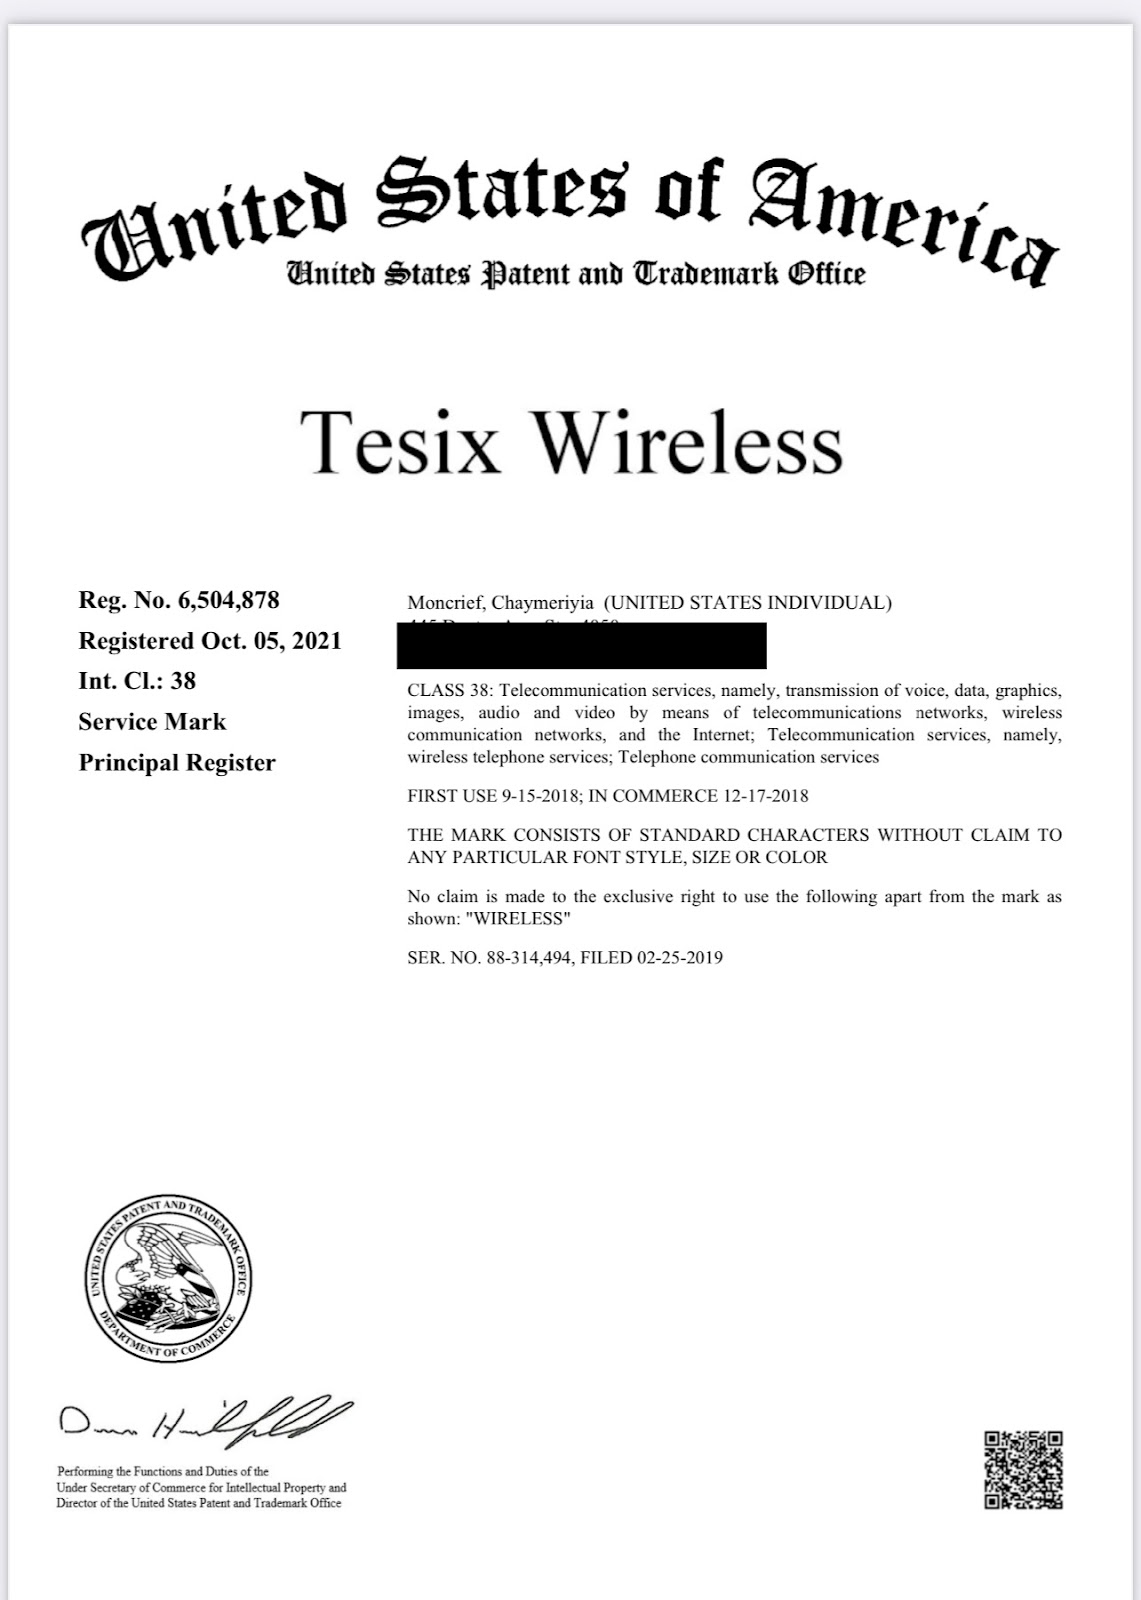 tesix-wireless-network